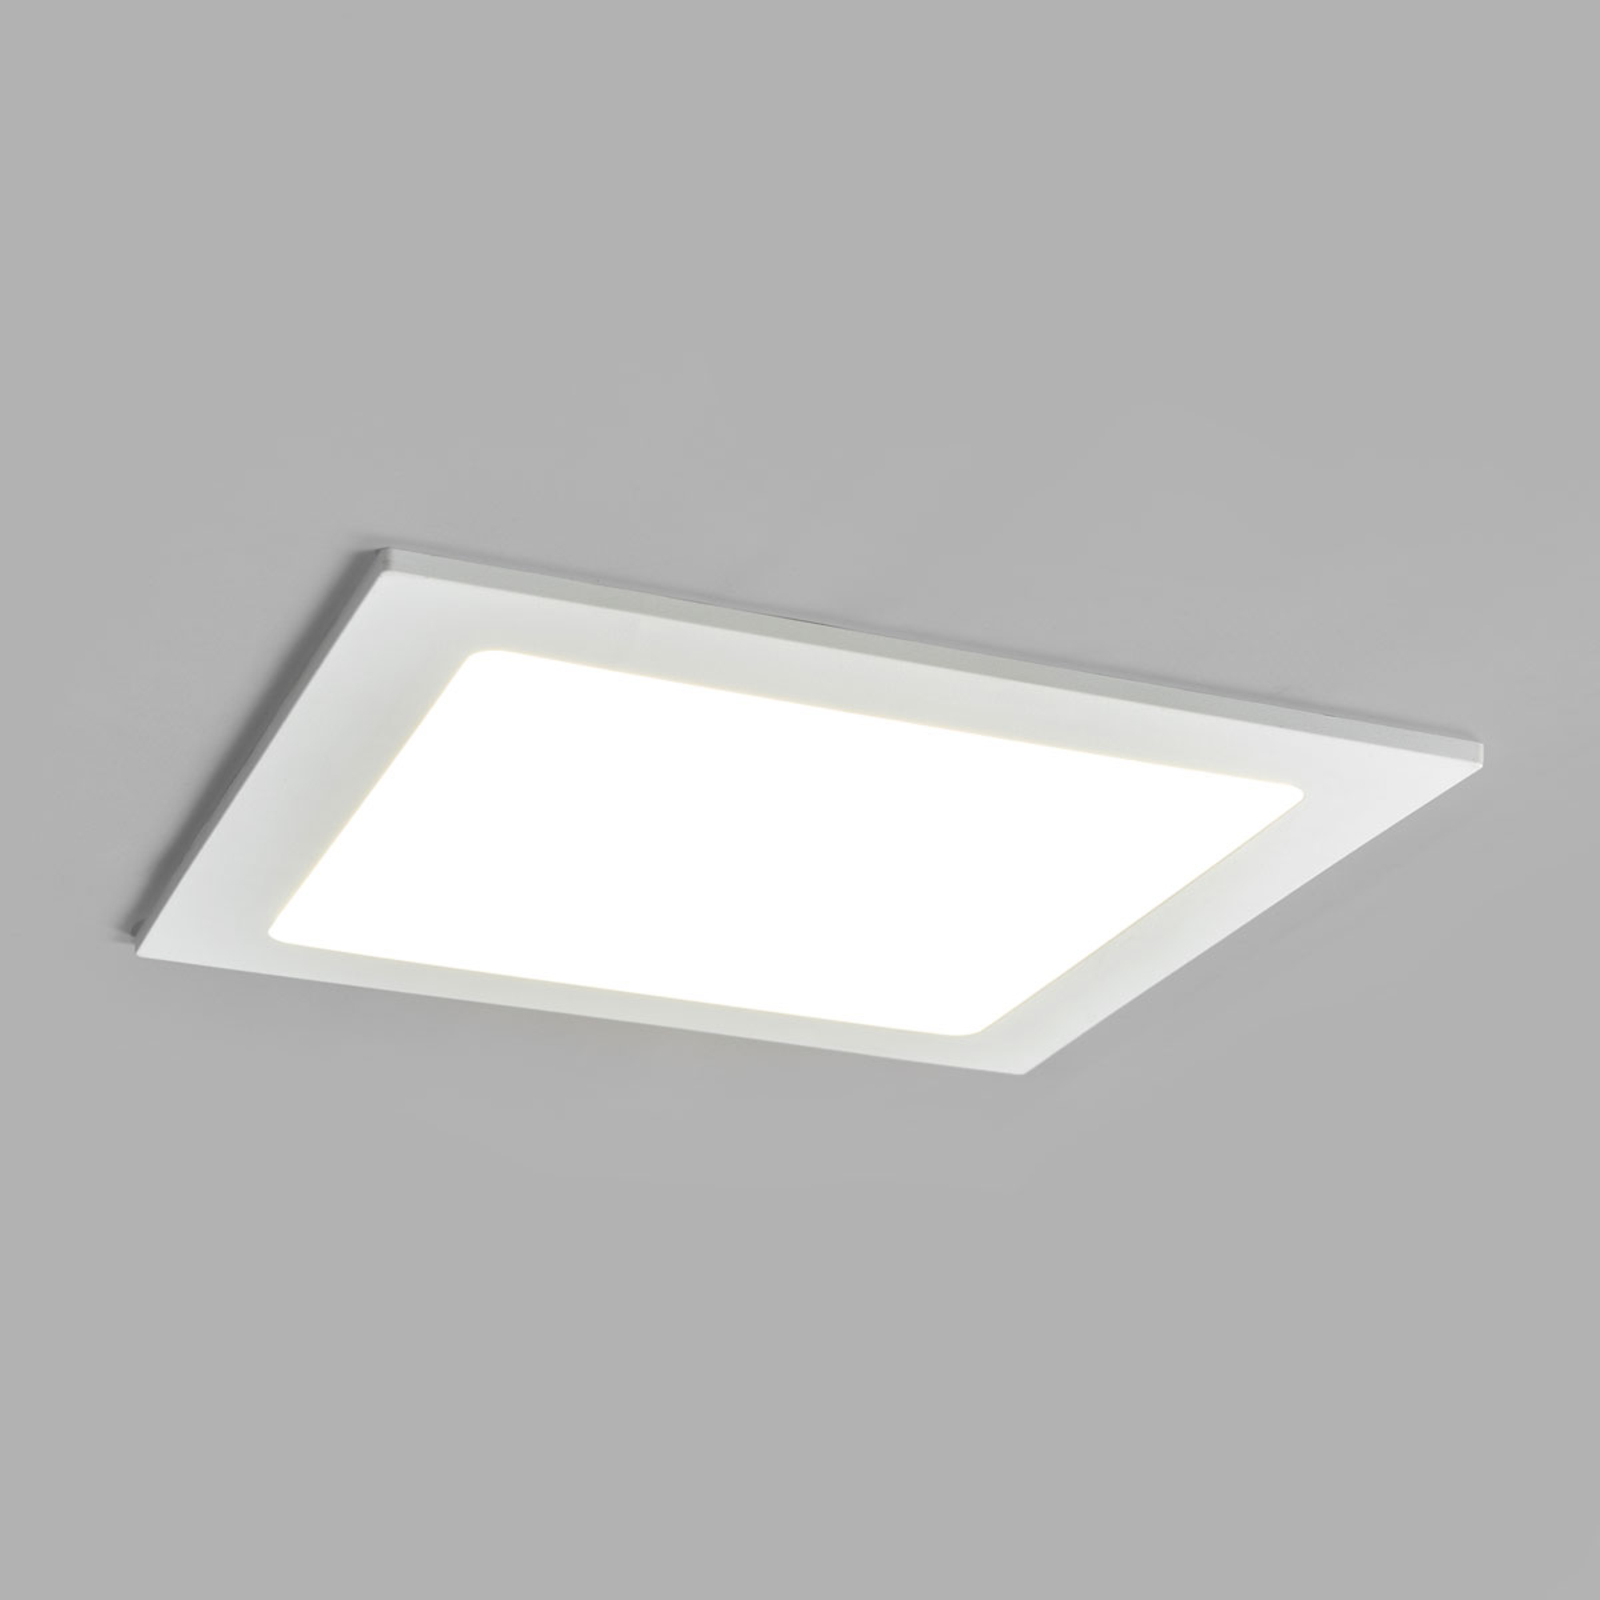 Joki LED downlight white 4000 K angular 22 cm